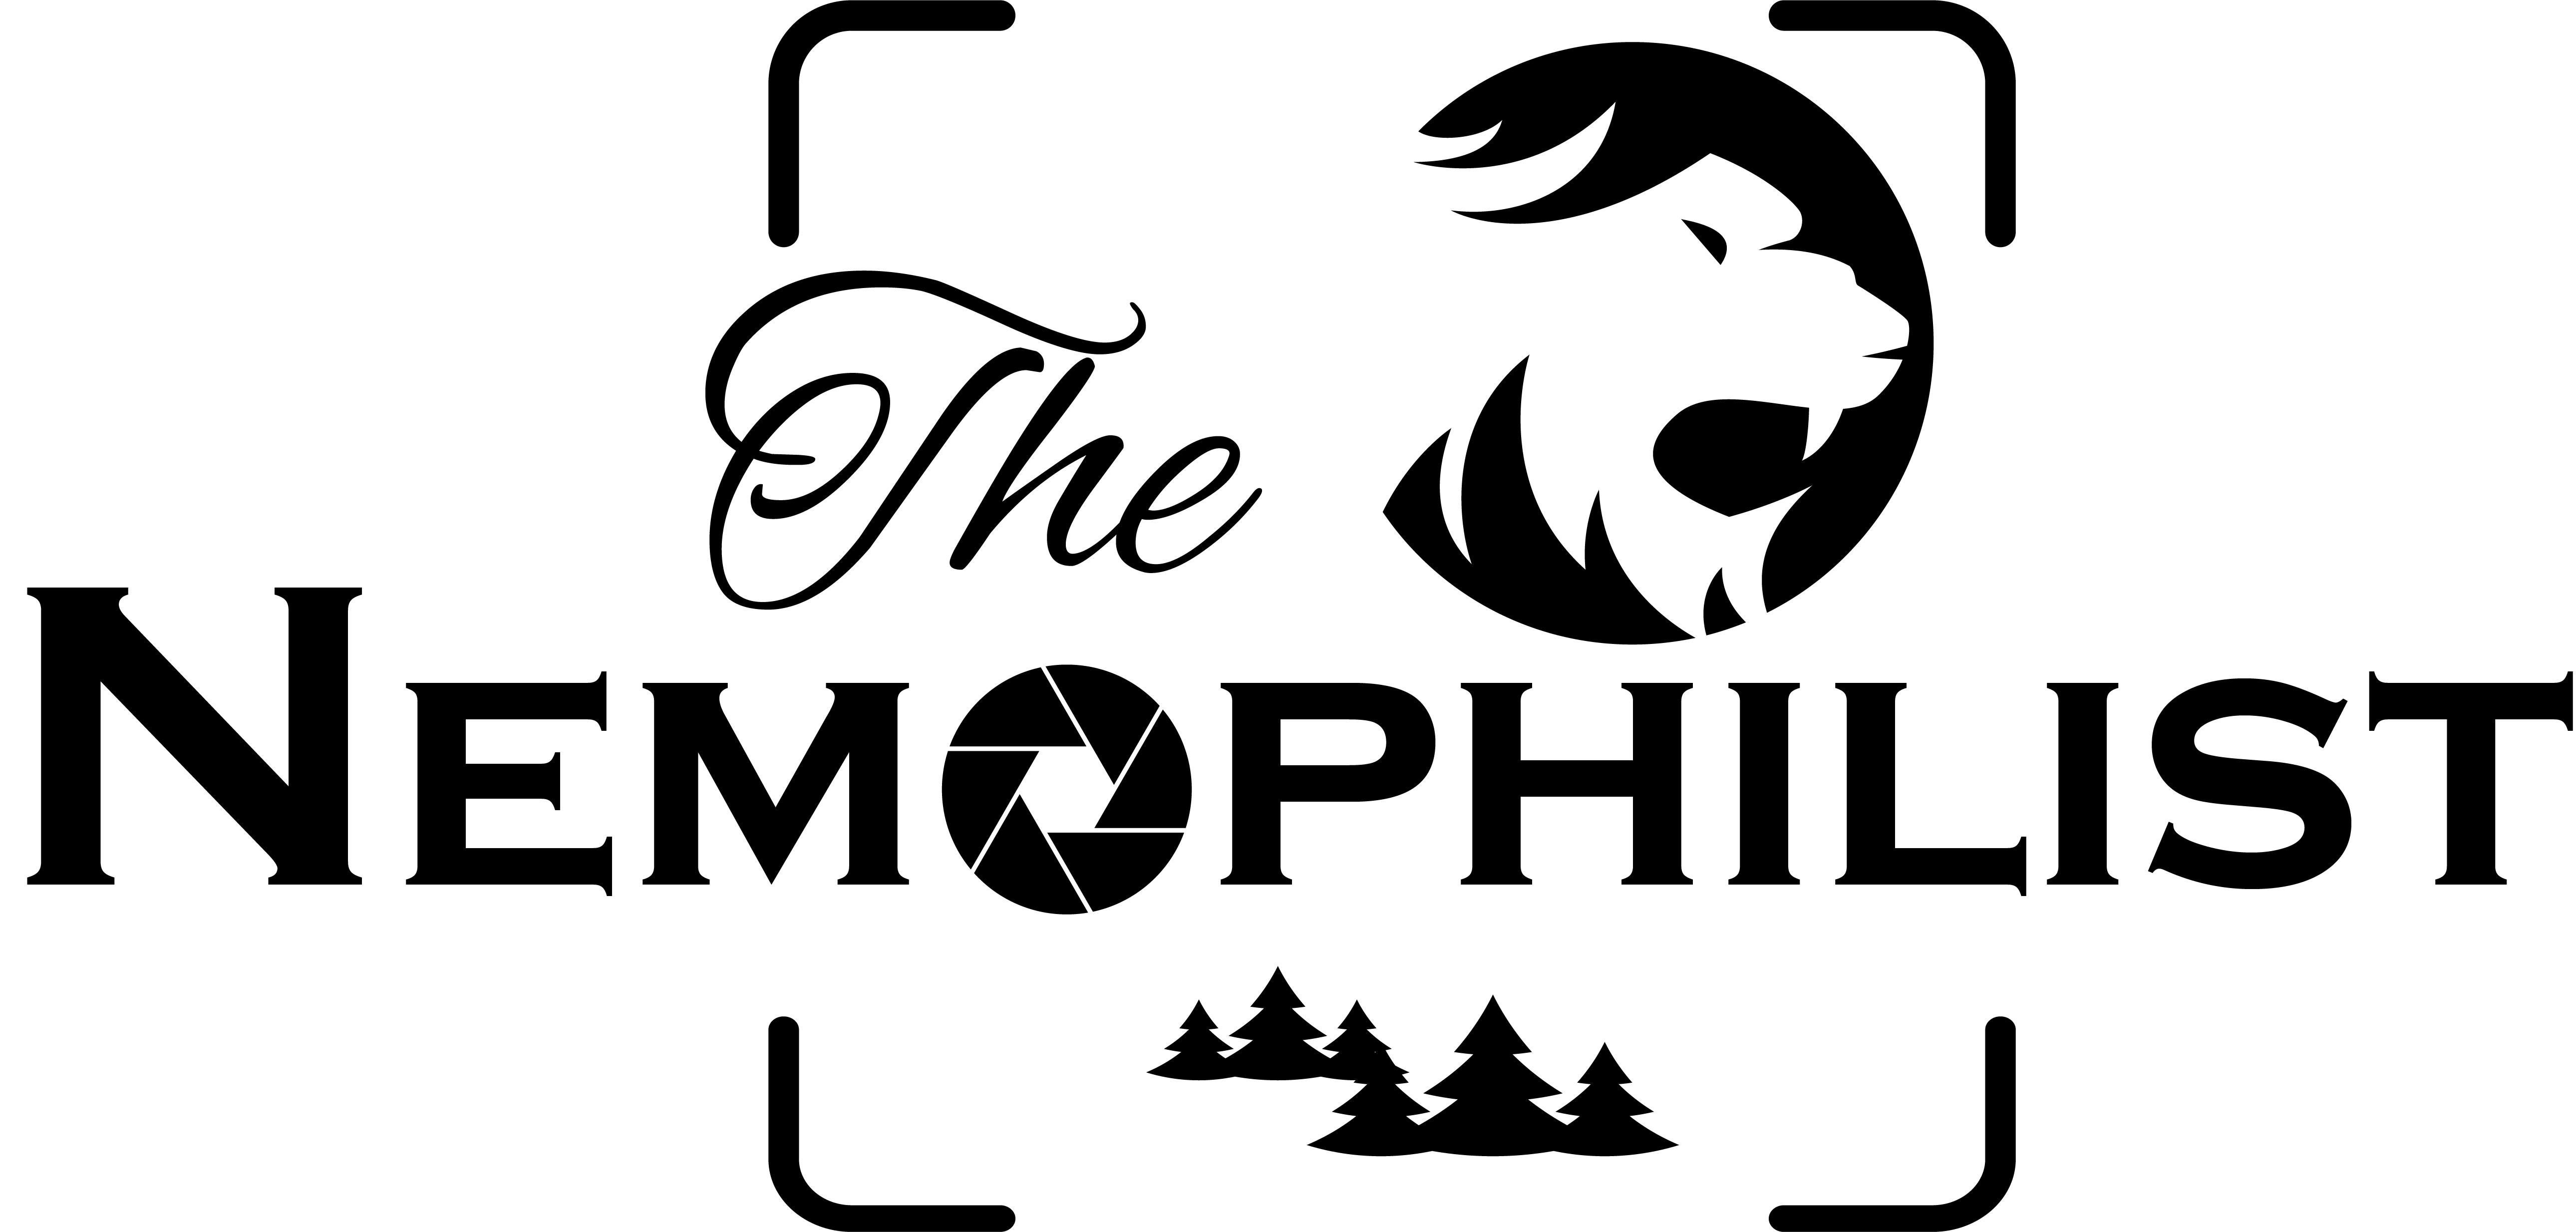 1The Nemophilist logo